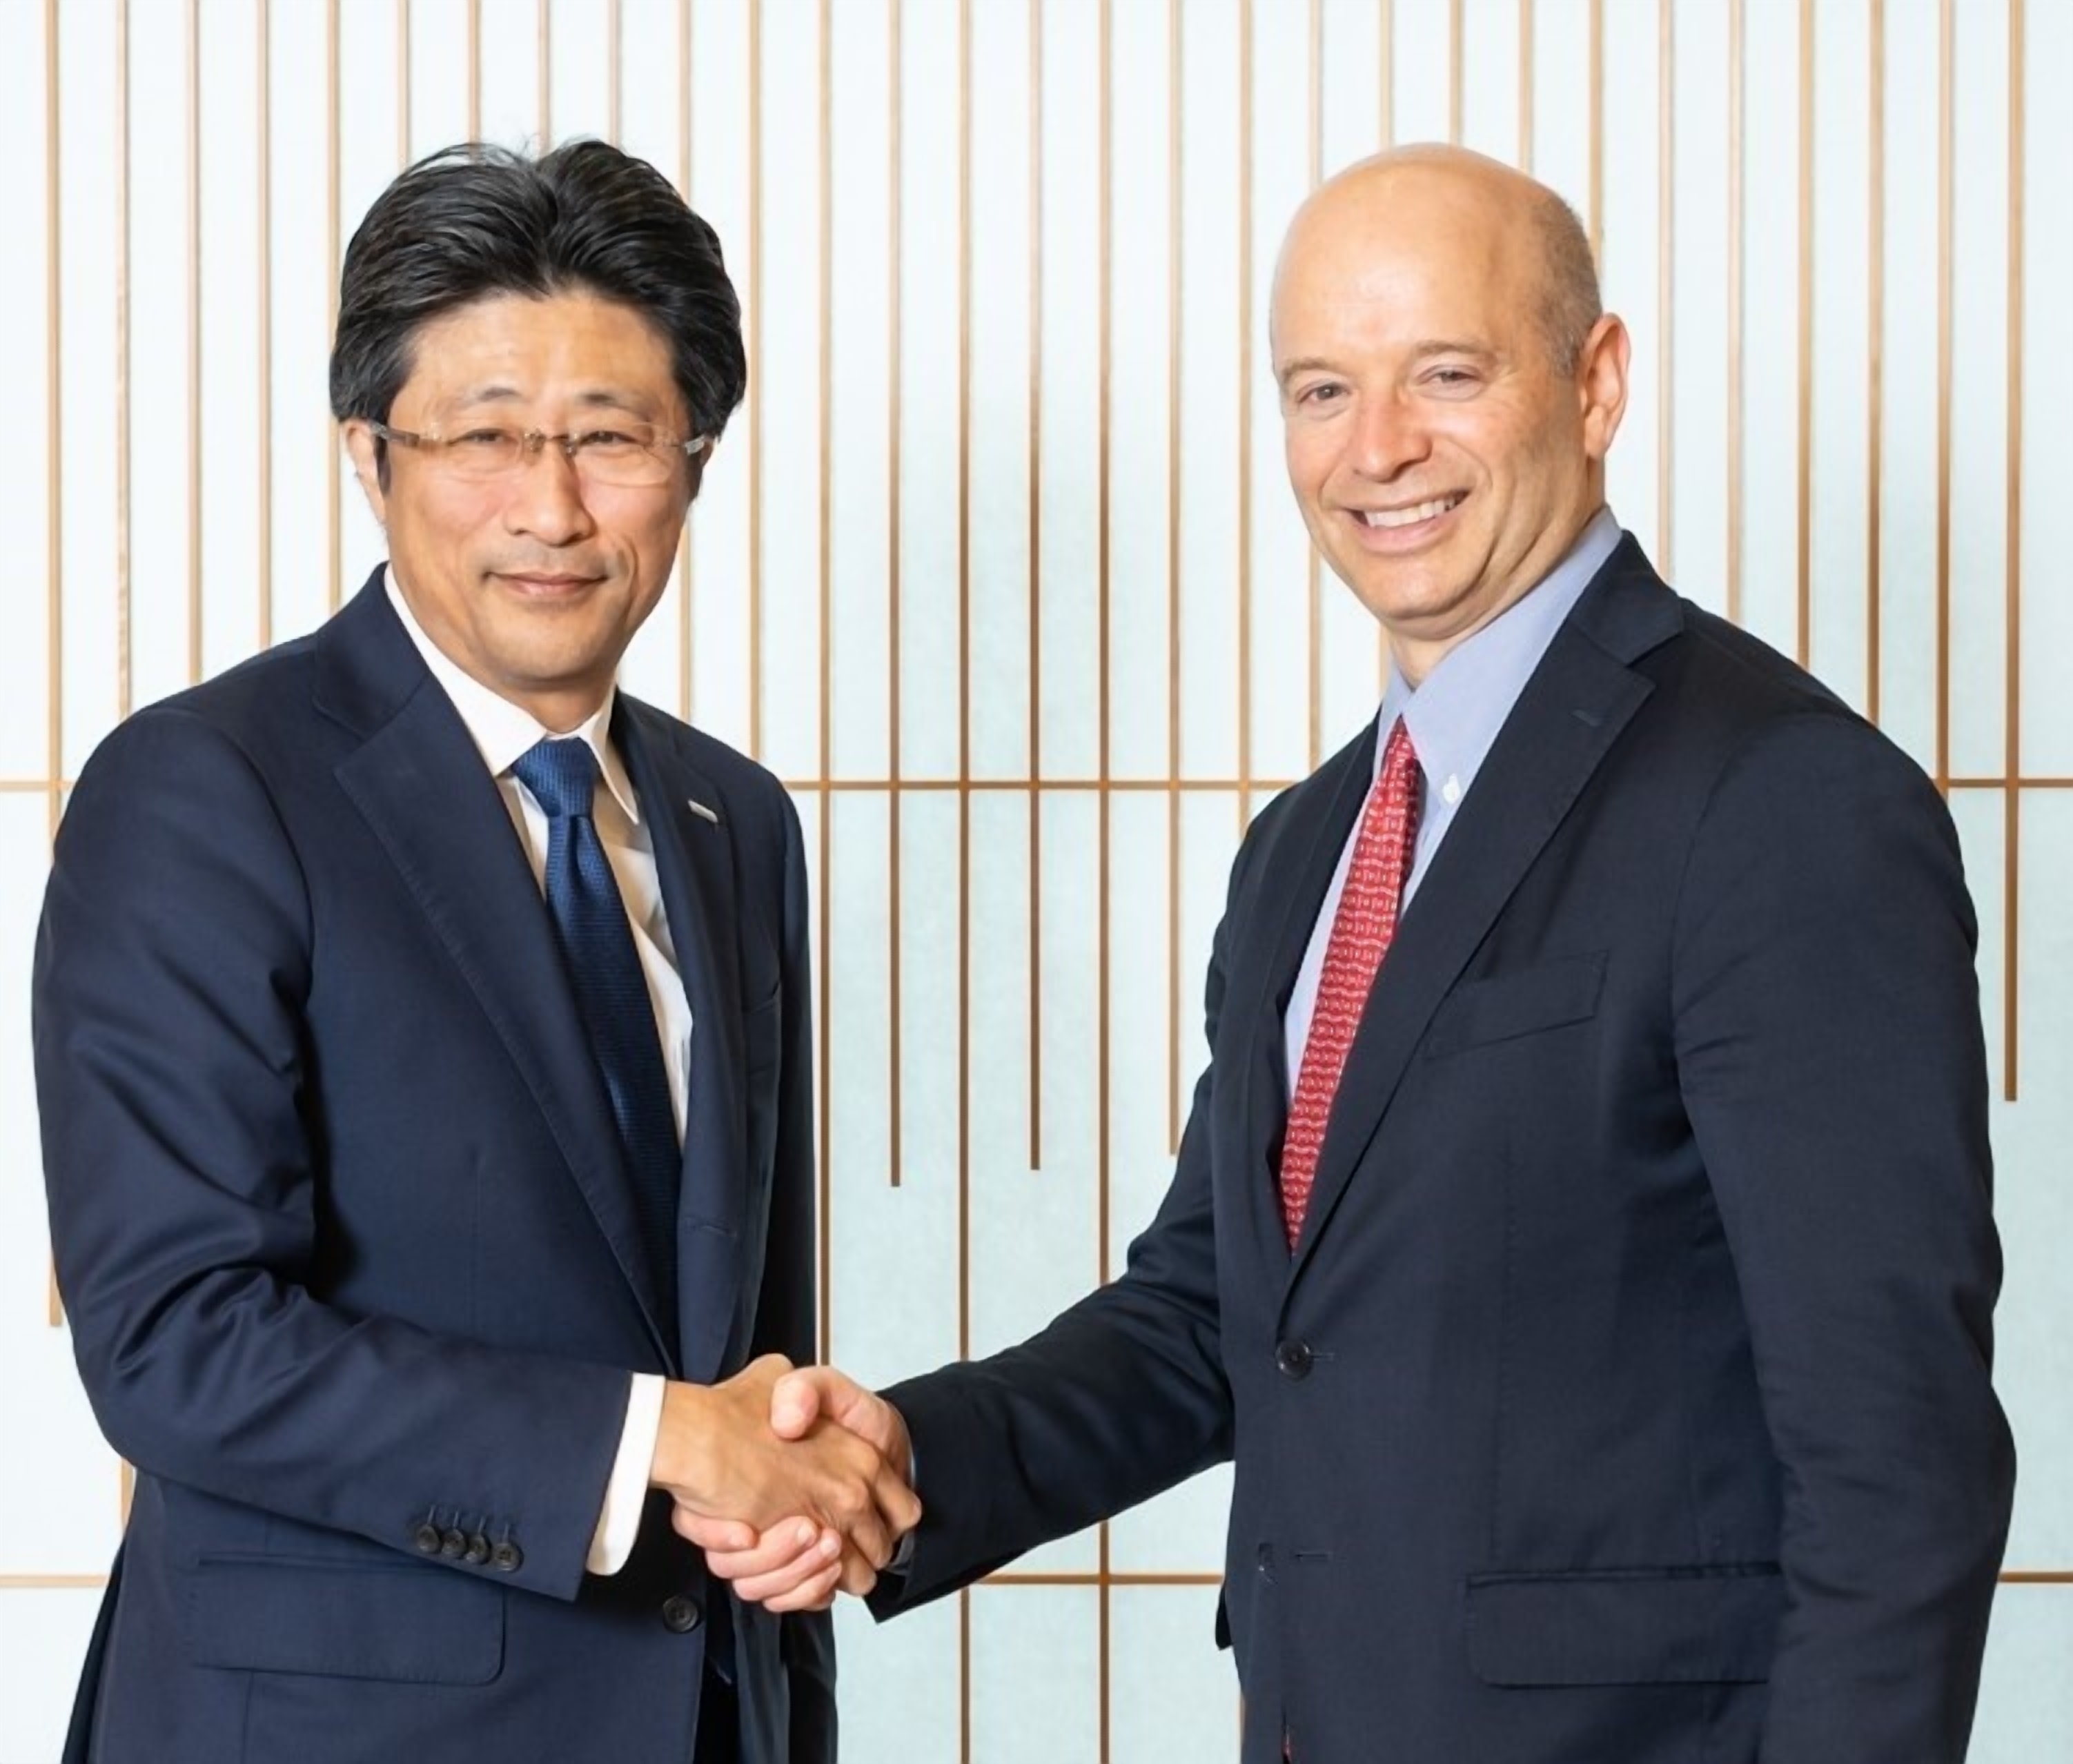 KnowESG_Mizuho, LSEG Partner to Grow Carbon Credit Market